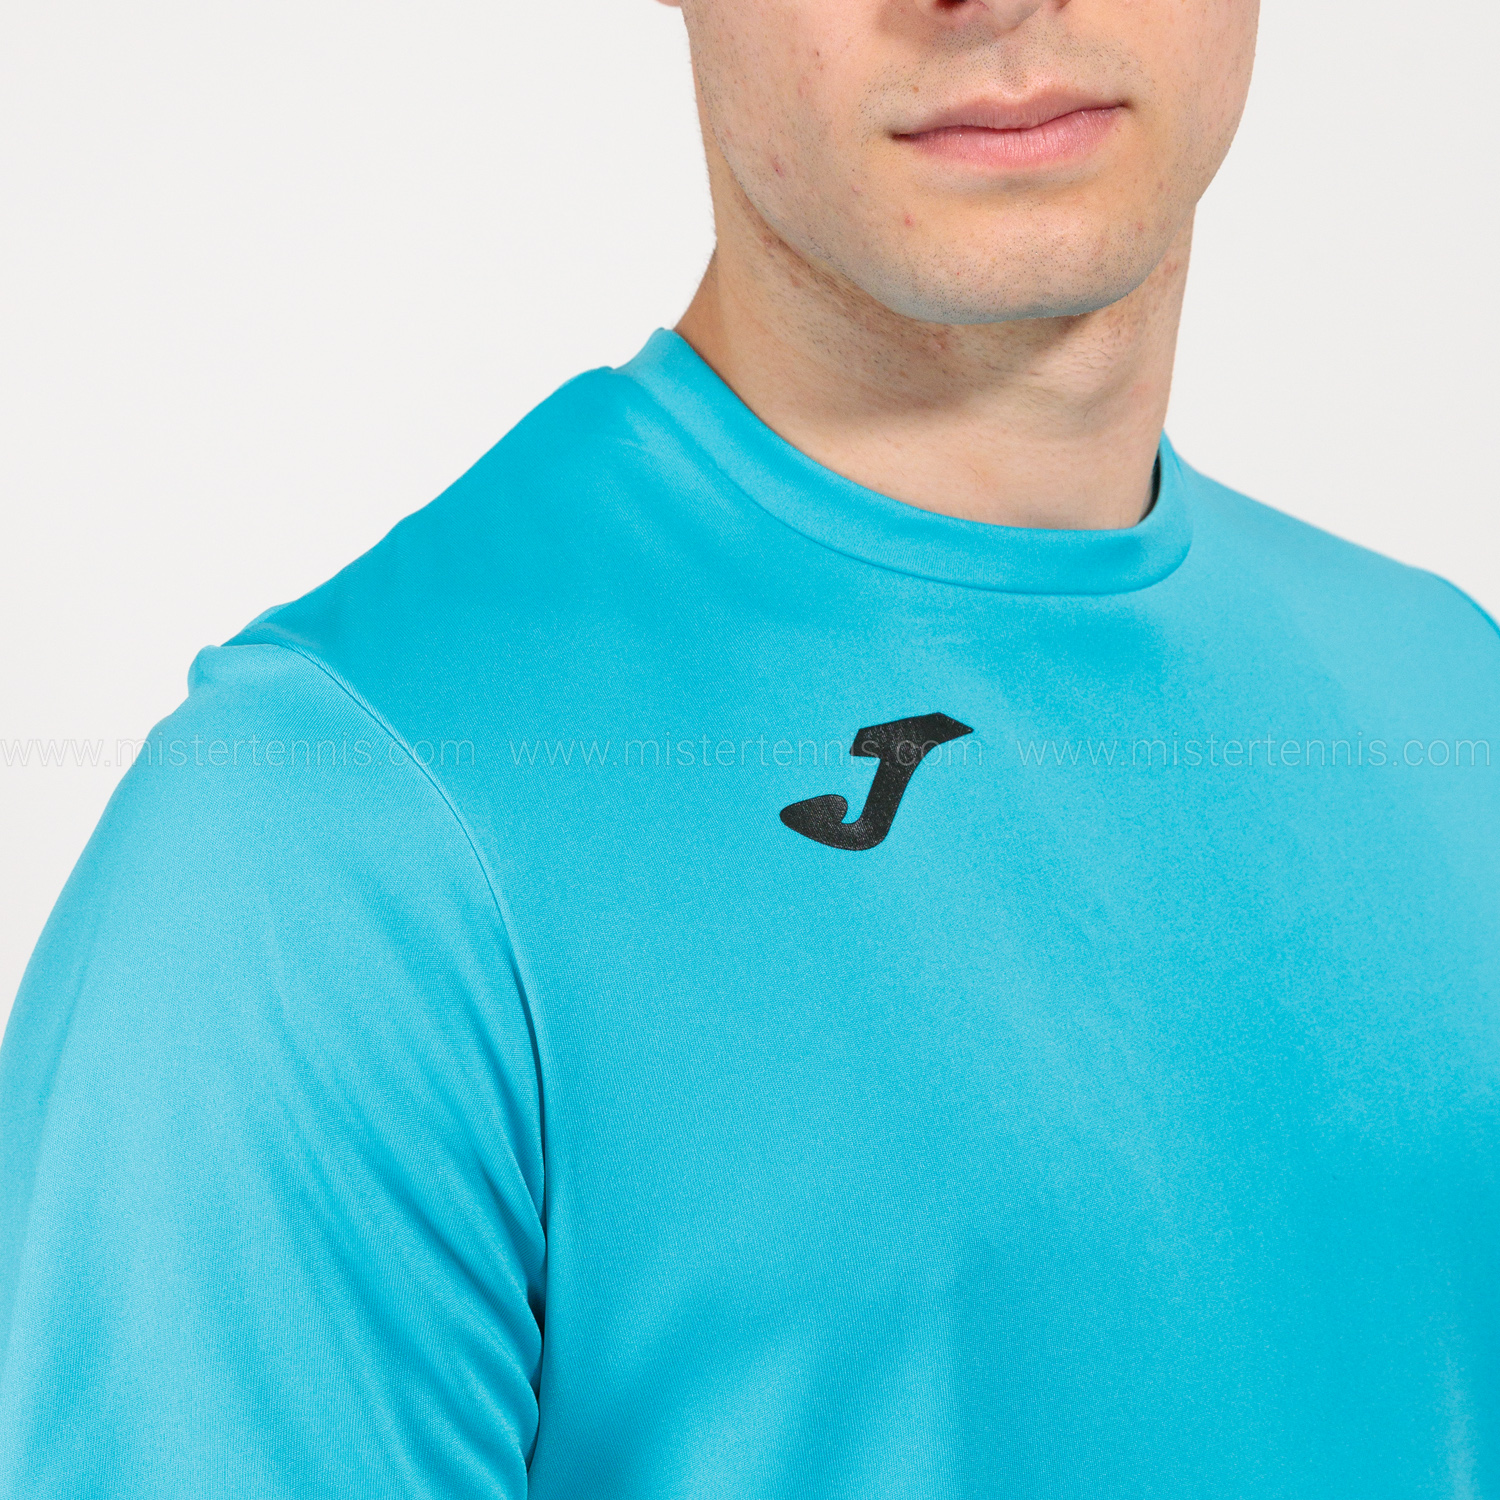 Joma Combi T-Shirt - Fluor Turquoise